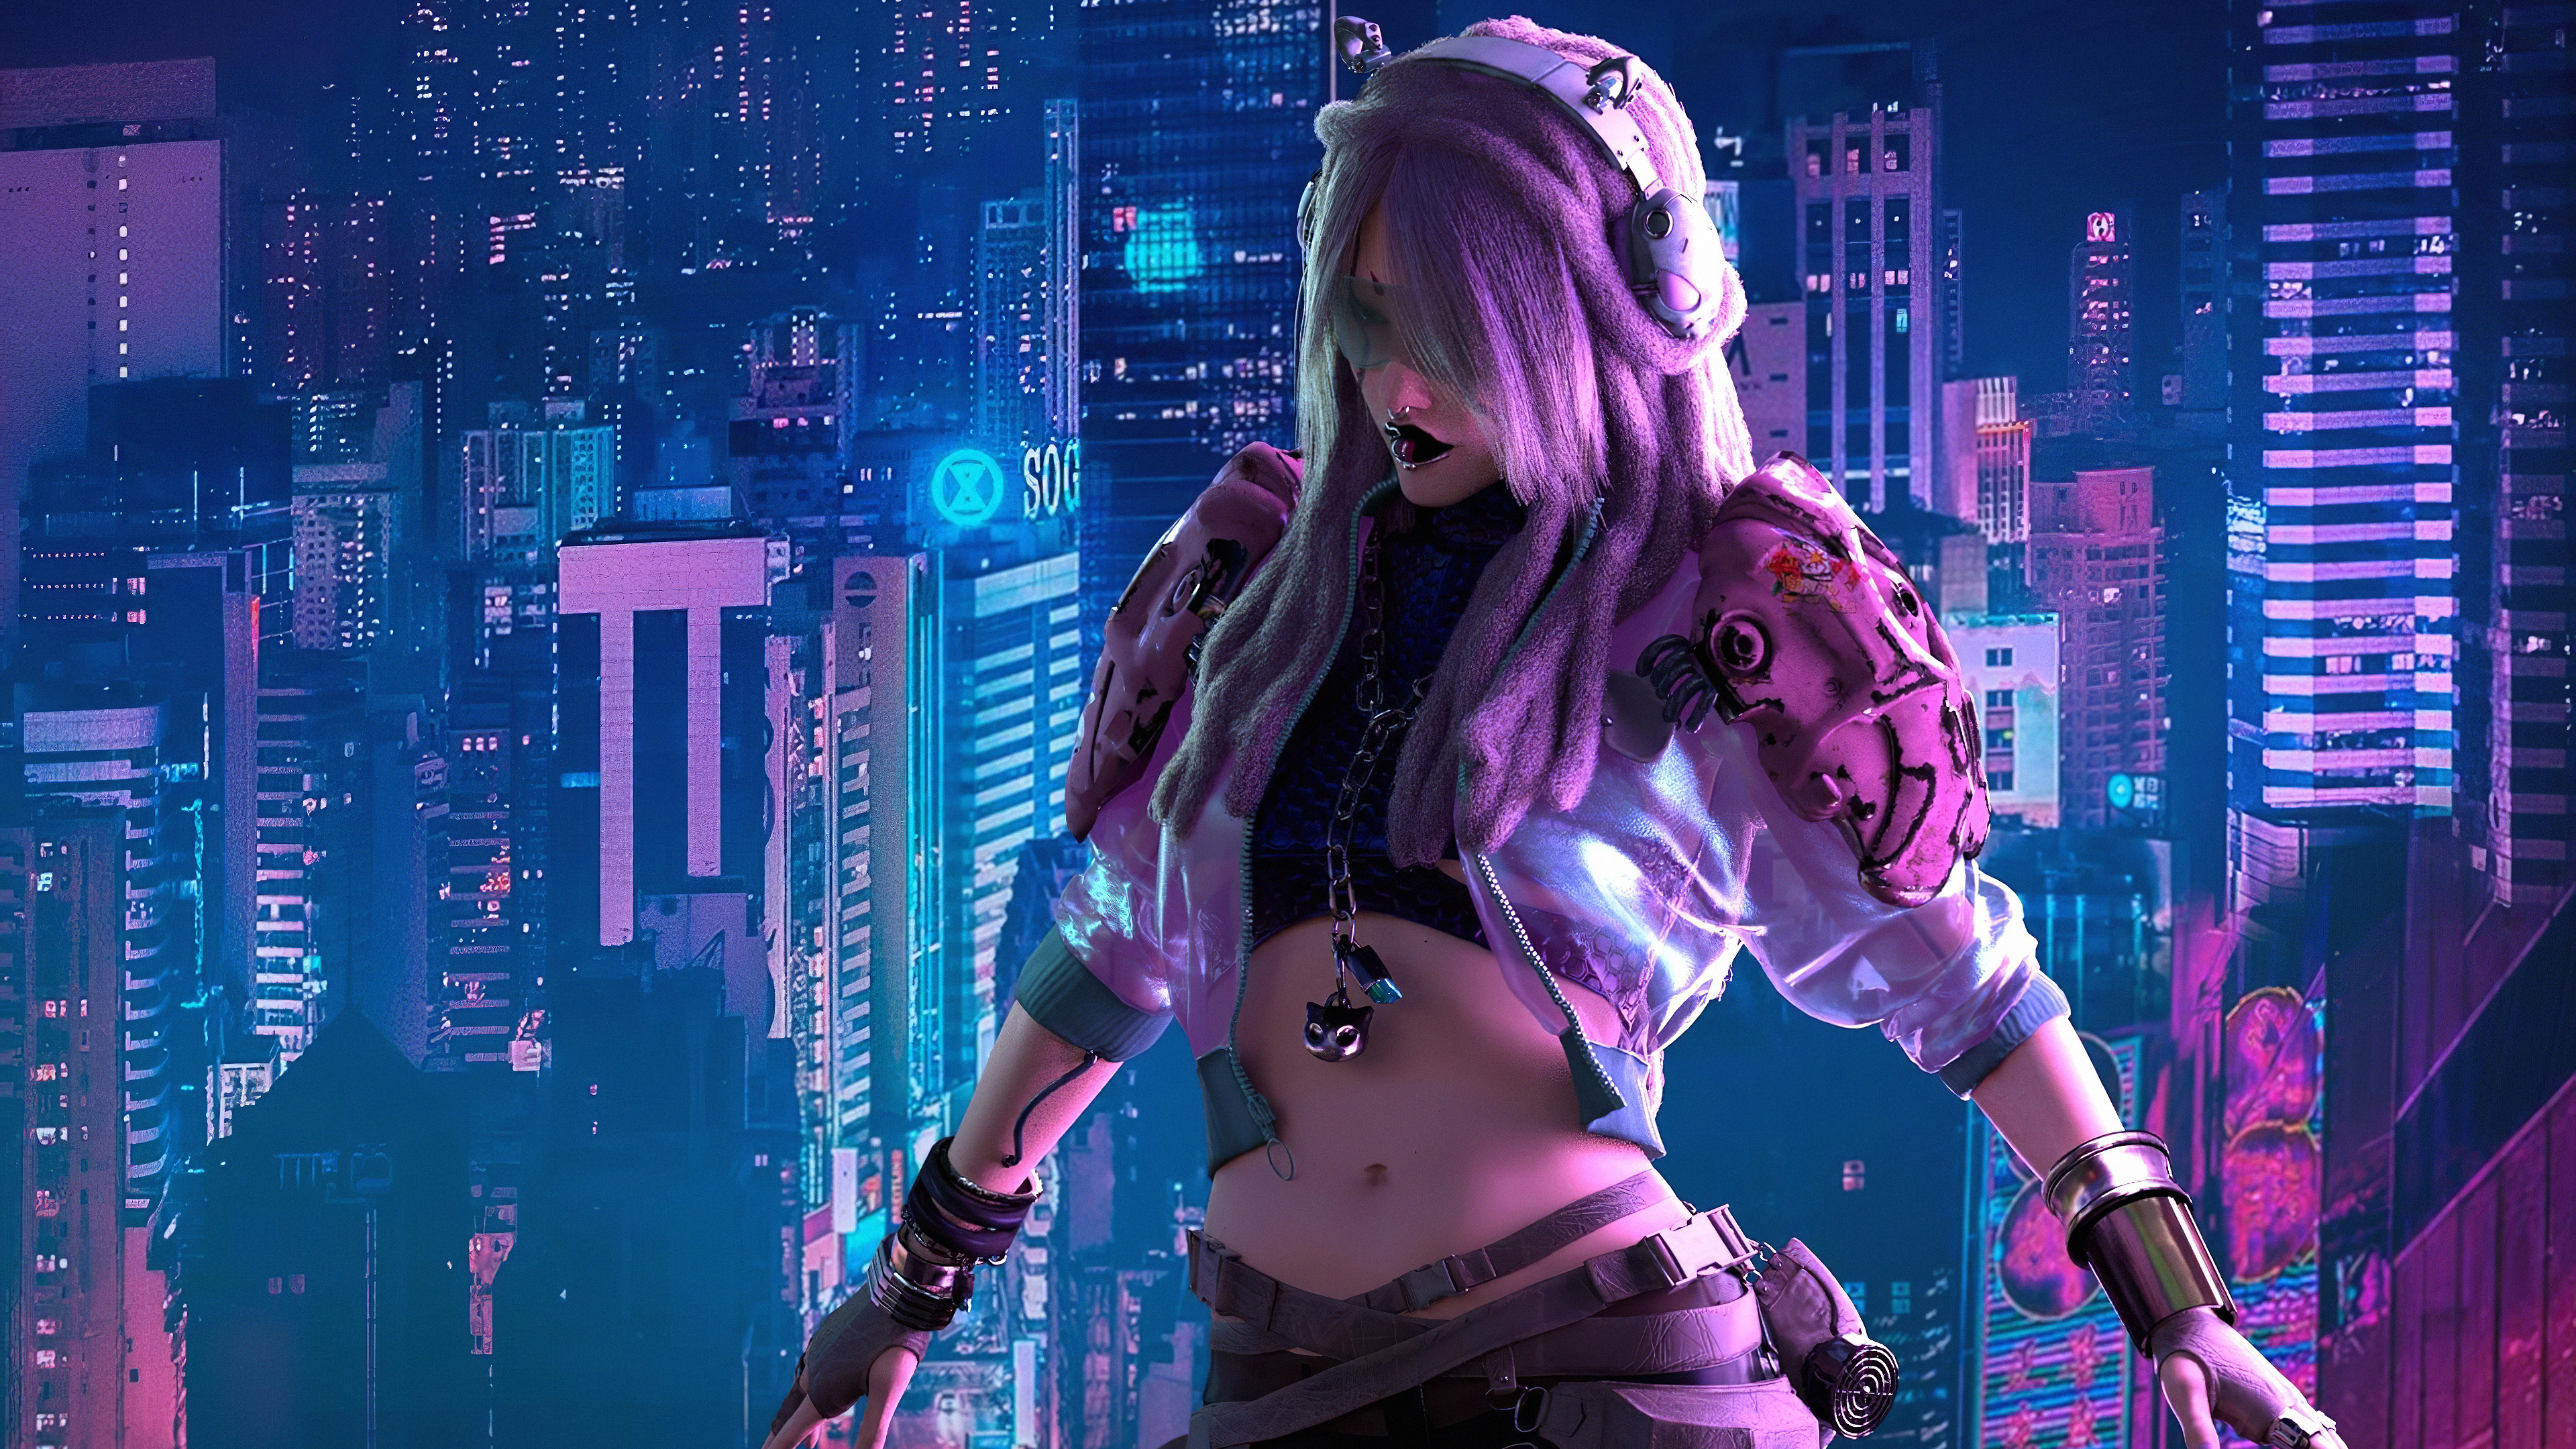 Cyberpunk City Girl